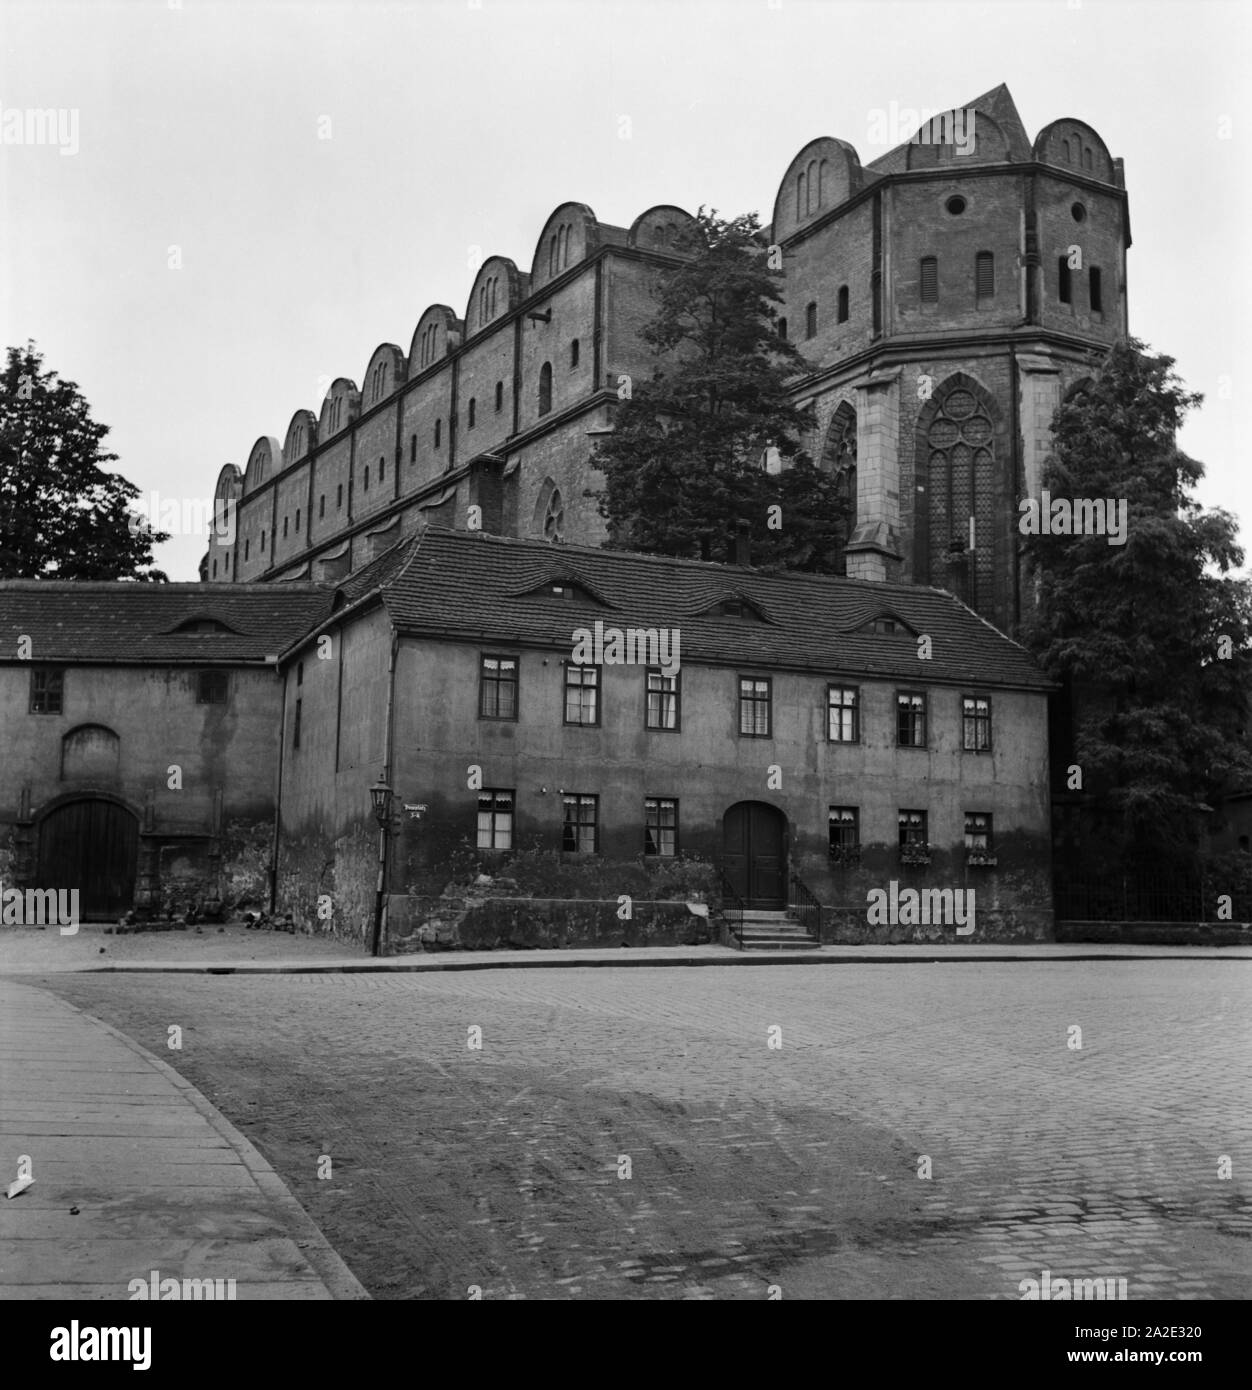 Der Dom in der Altstadt von Halle an der Saale, Allemagne Allemagne Années 1930 er Jahre. La cathédrale de la vieille ville de Halle, Allemagne 1930. Banque D'Images